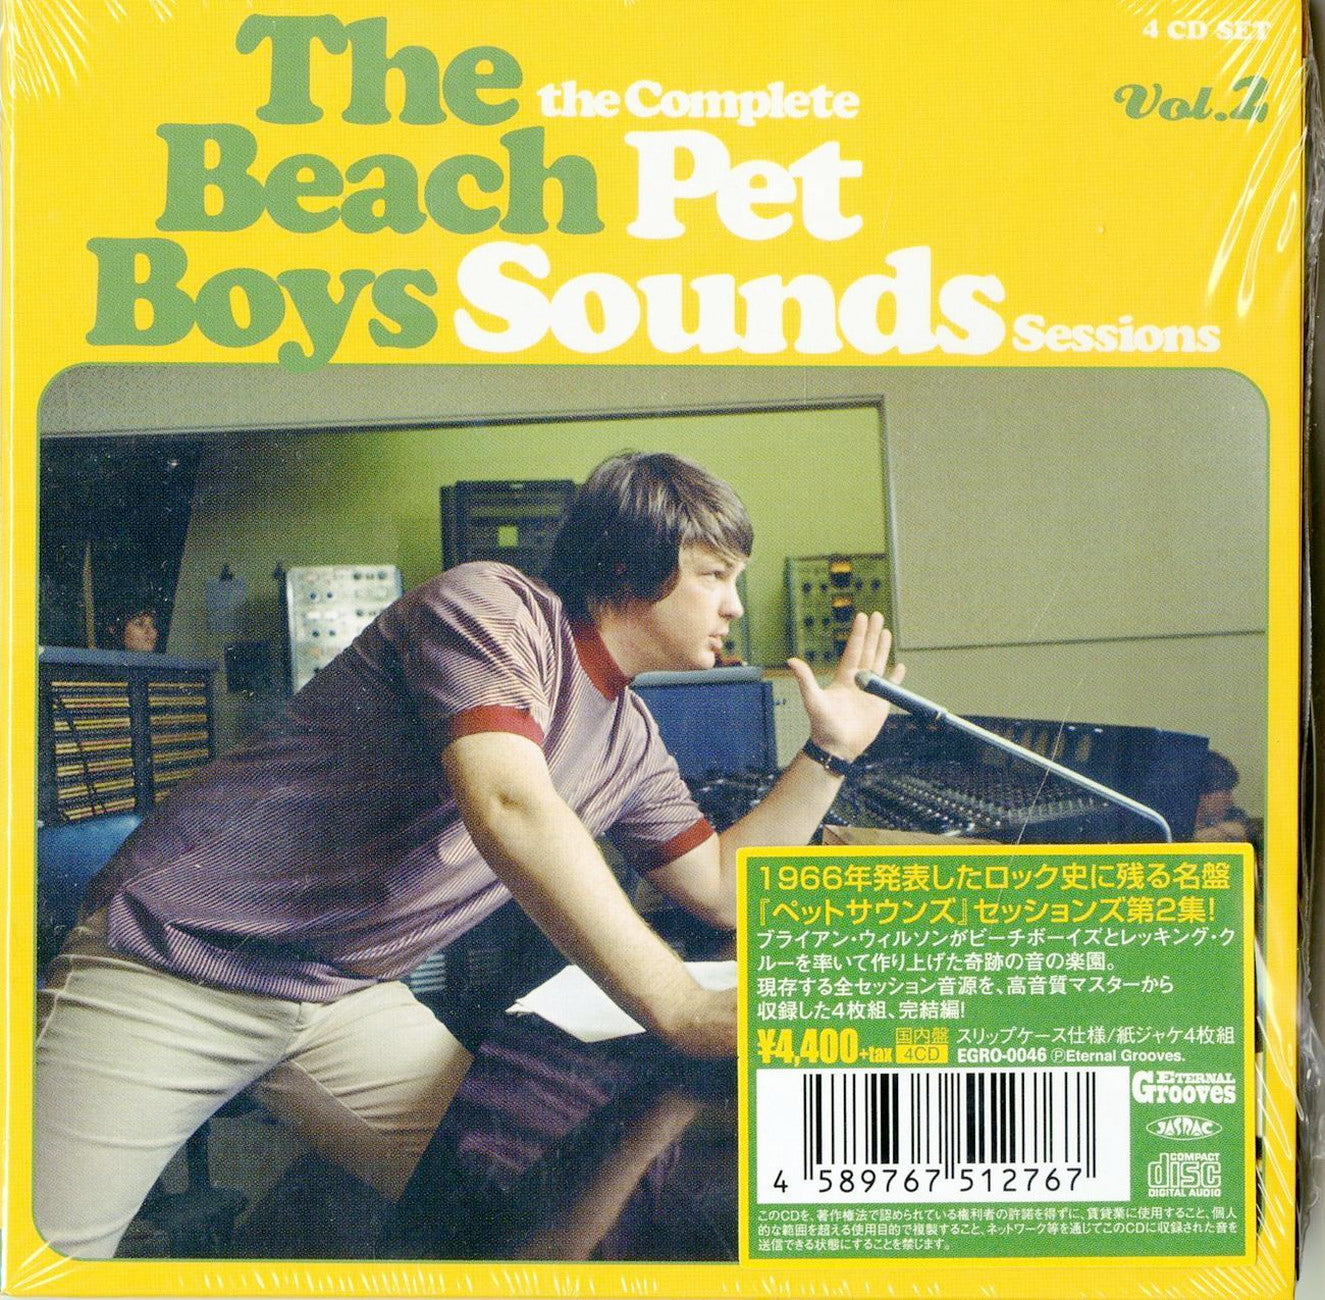 The Beach Boys - The Complete Pet Sounds Sessions Vol.2 - Japan 4 CD Box set